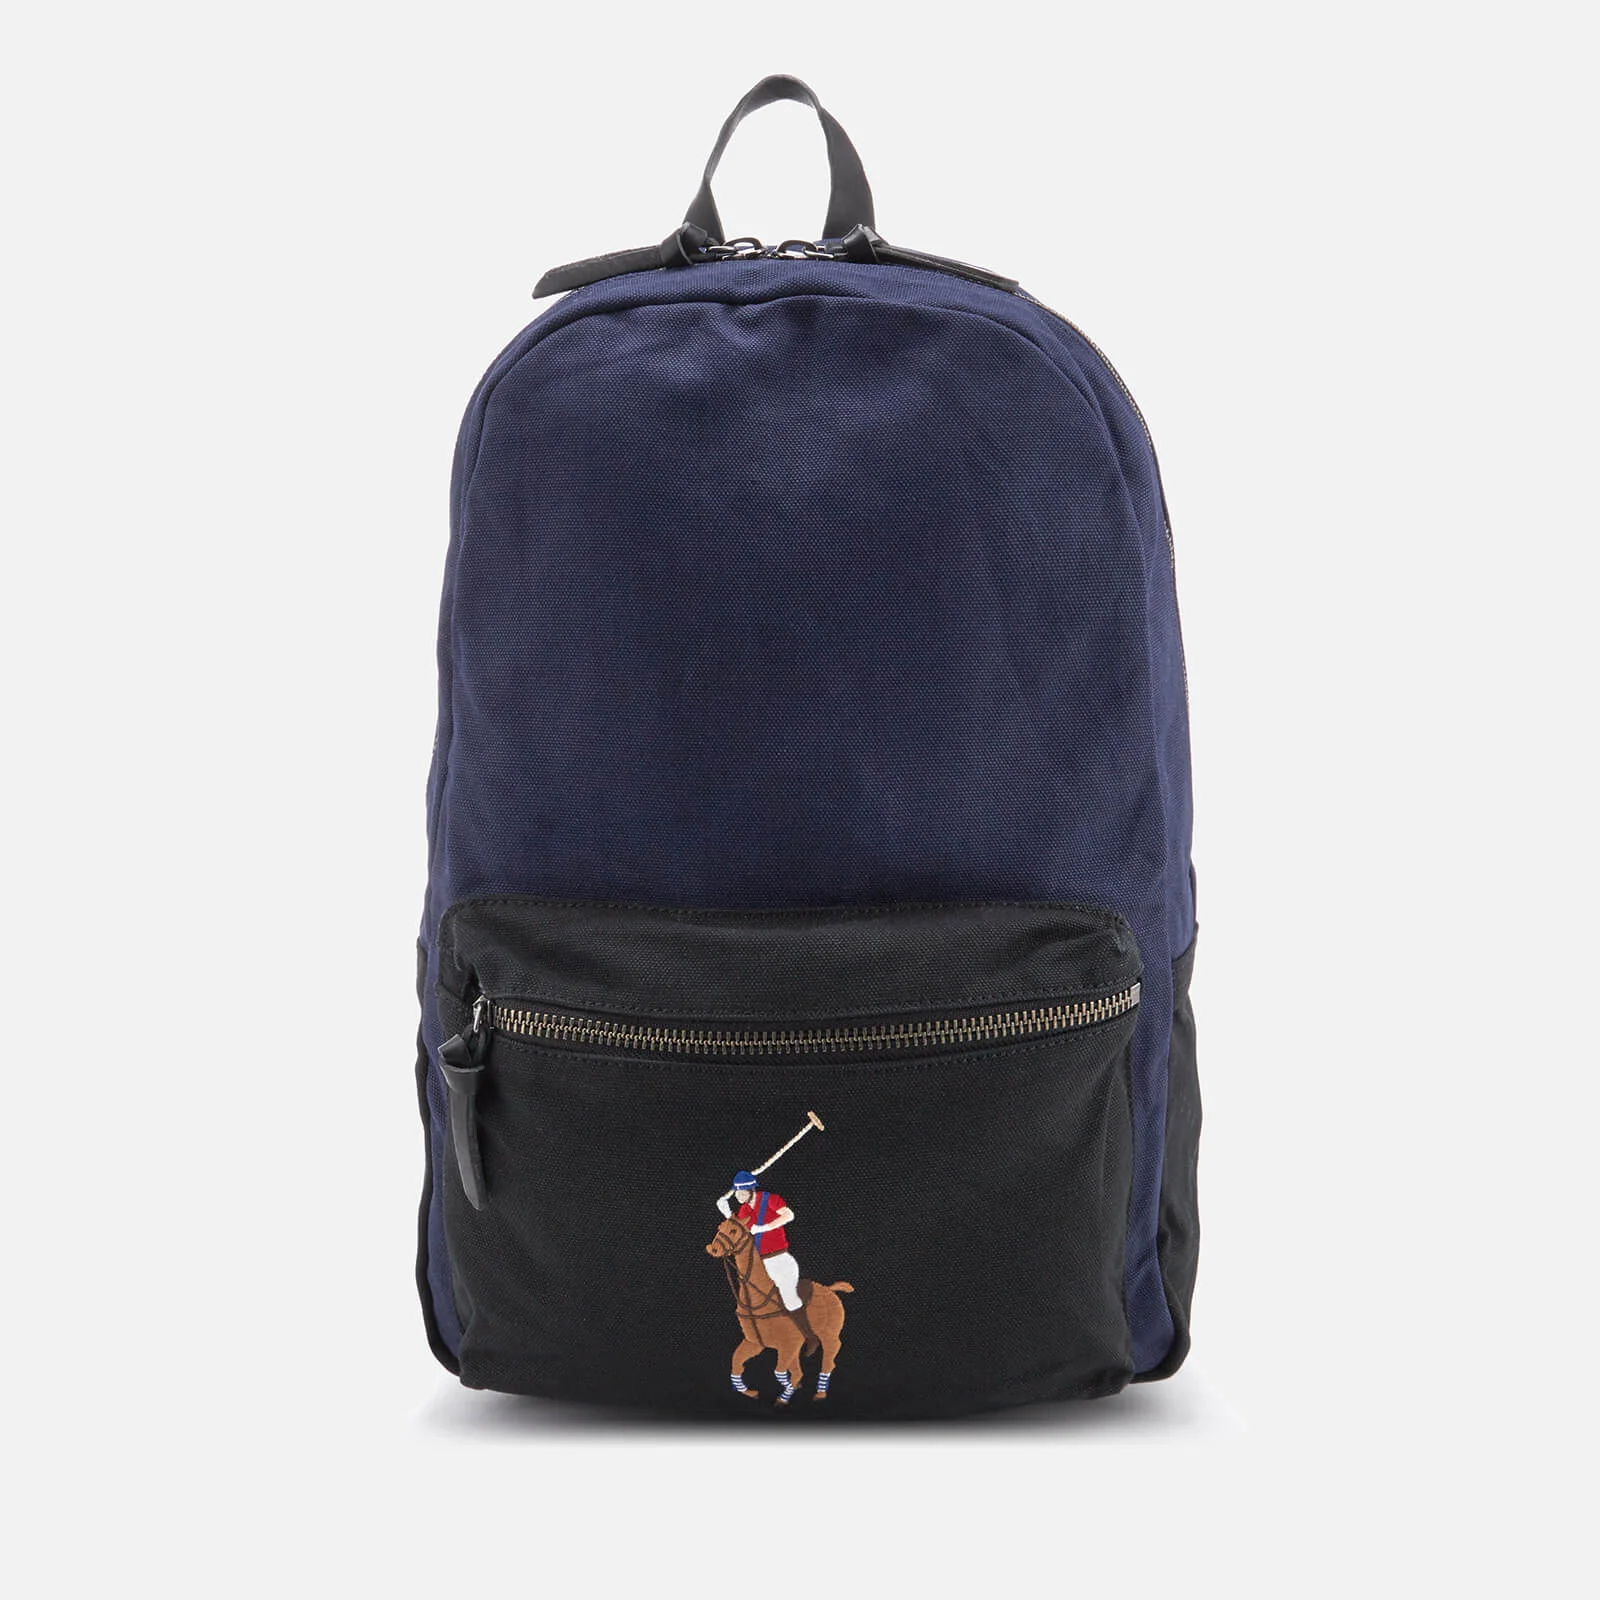 Polo Ralph Lauren Men's Medium Canvas Backpack - Navy/Black Image 1